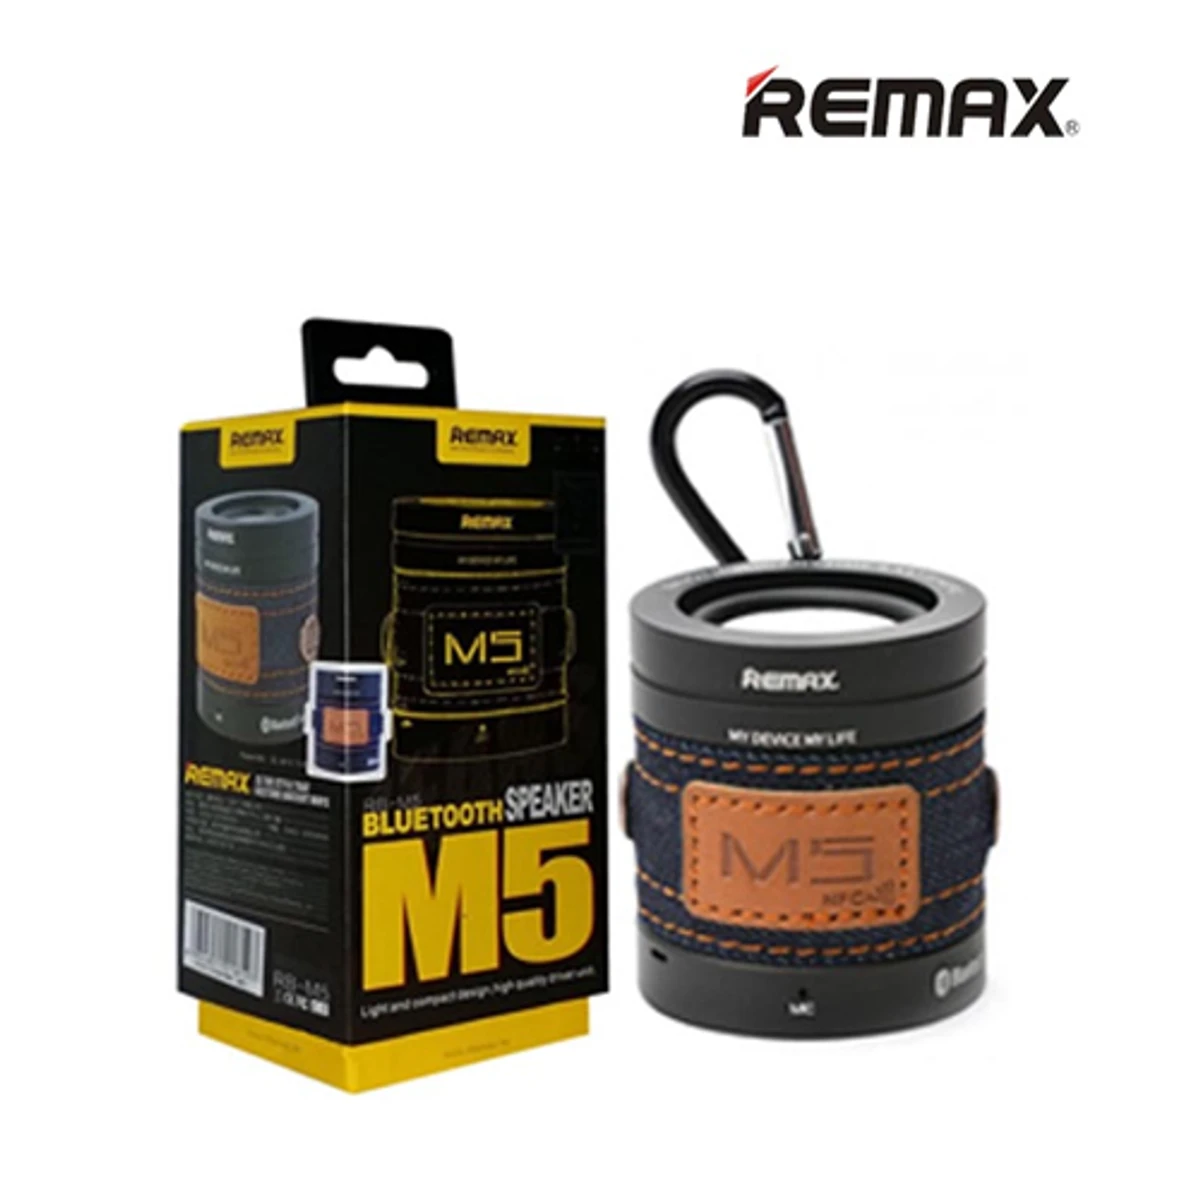 Wireless Speaker By Remax (RB M5)